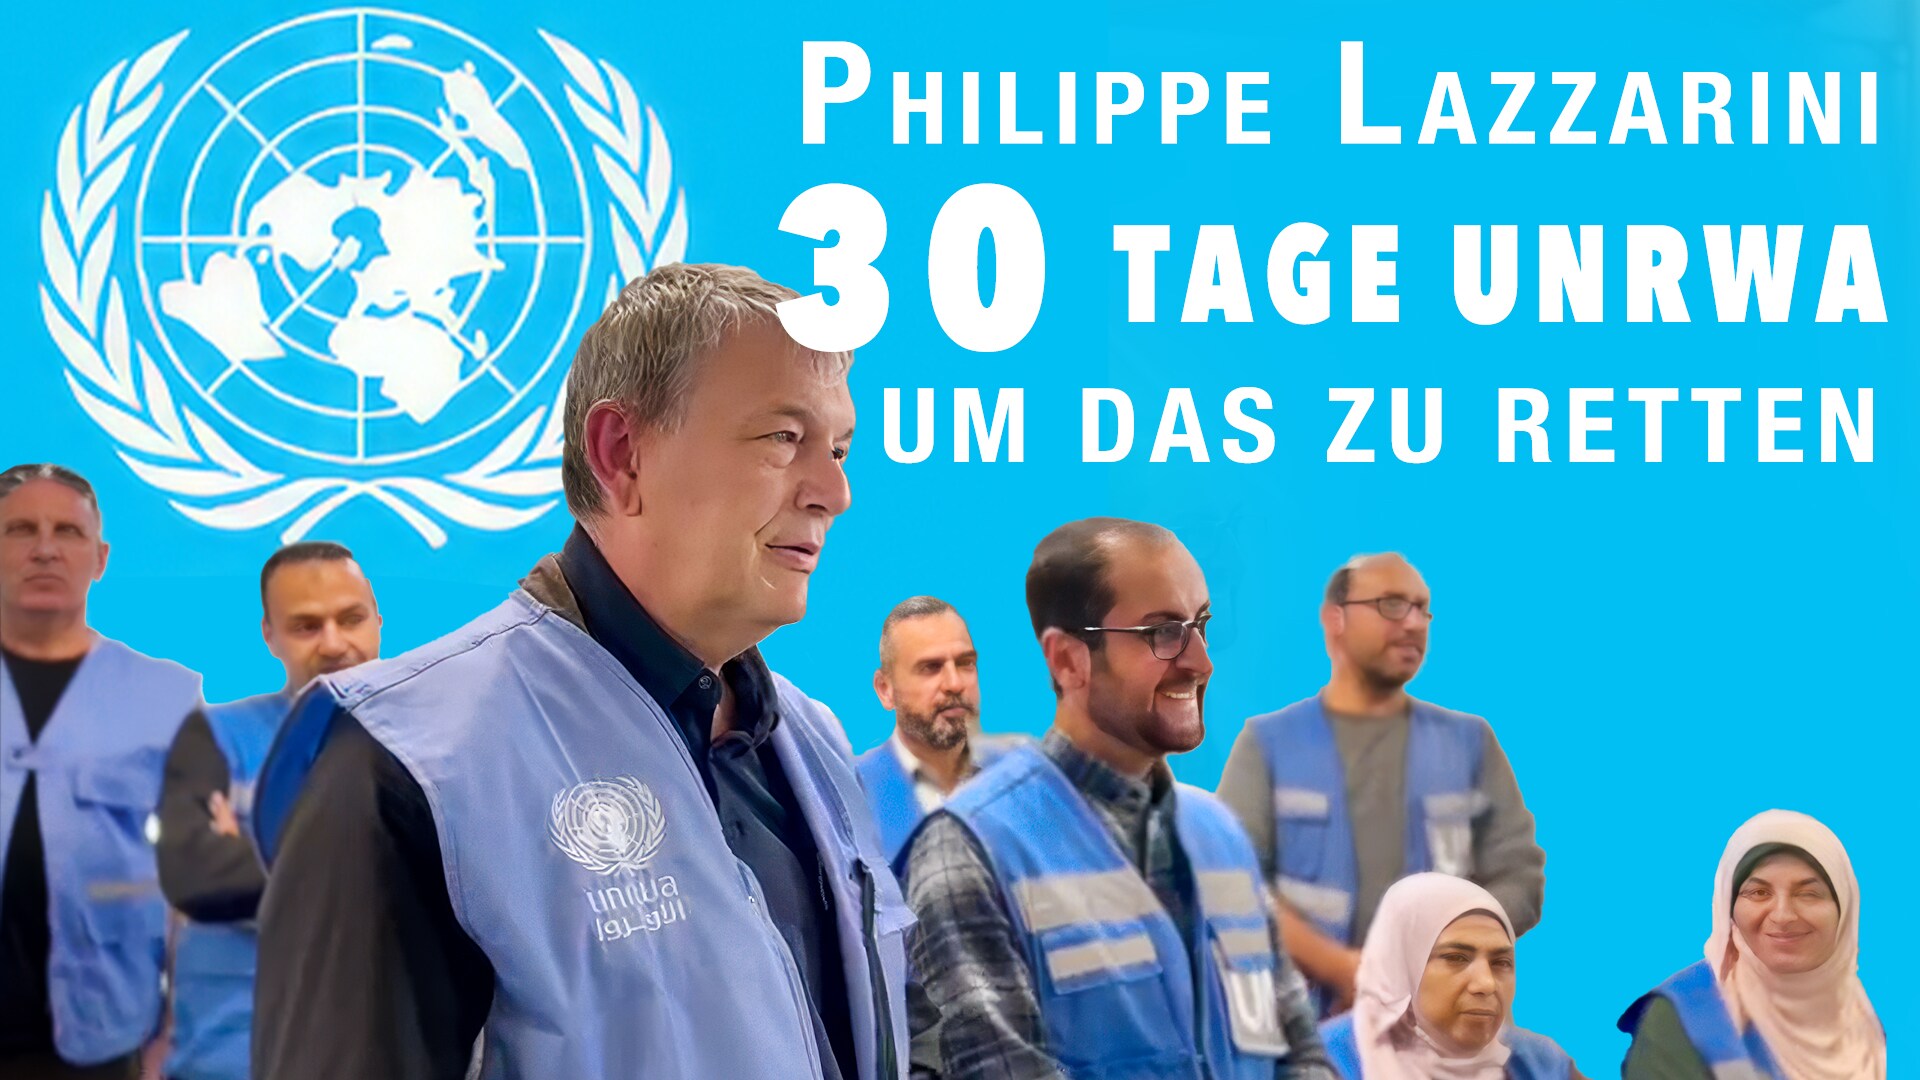 Philippe Lazzarini, 30 Tage, um das UNRWA zu retten